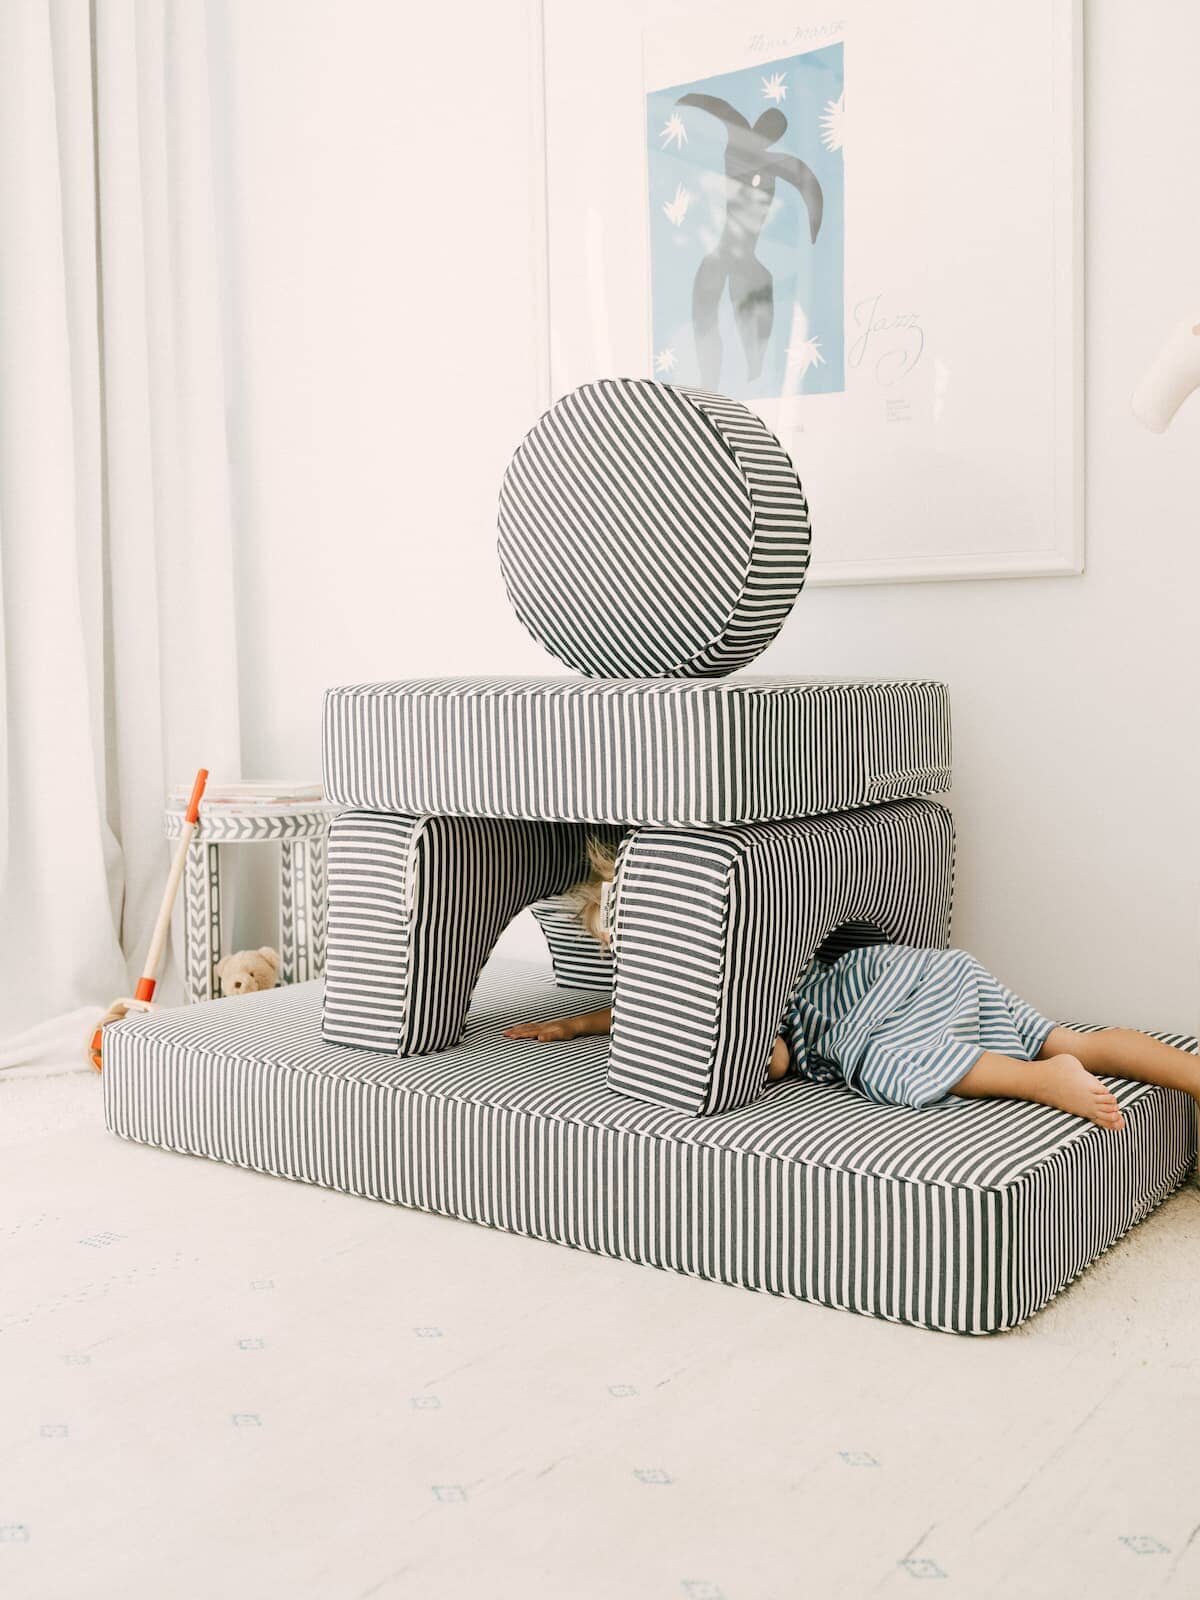 A child climbing through the stacked modular pillow stack